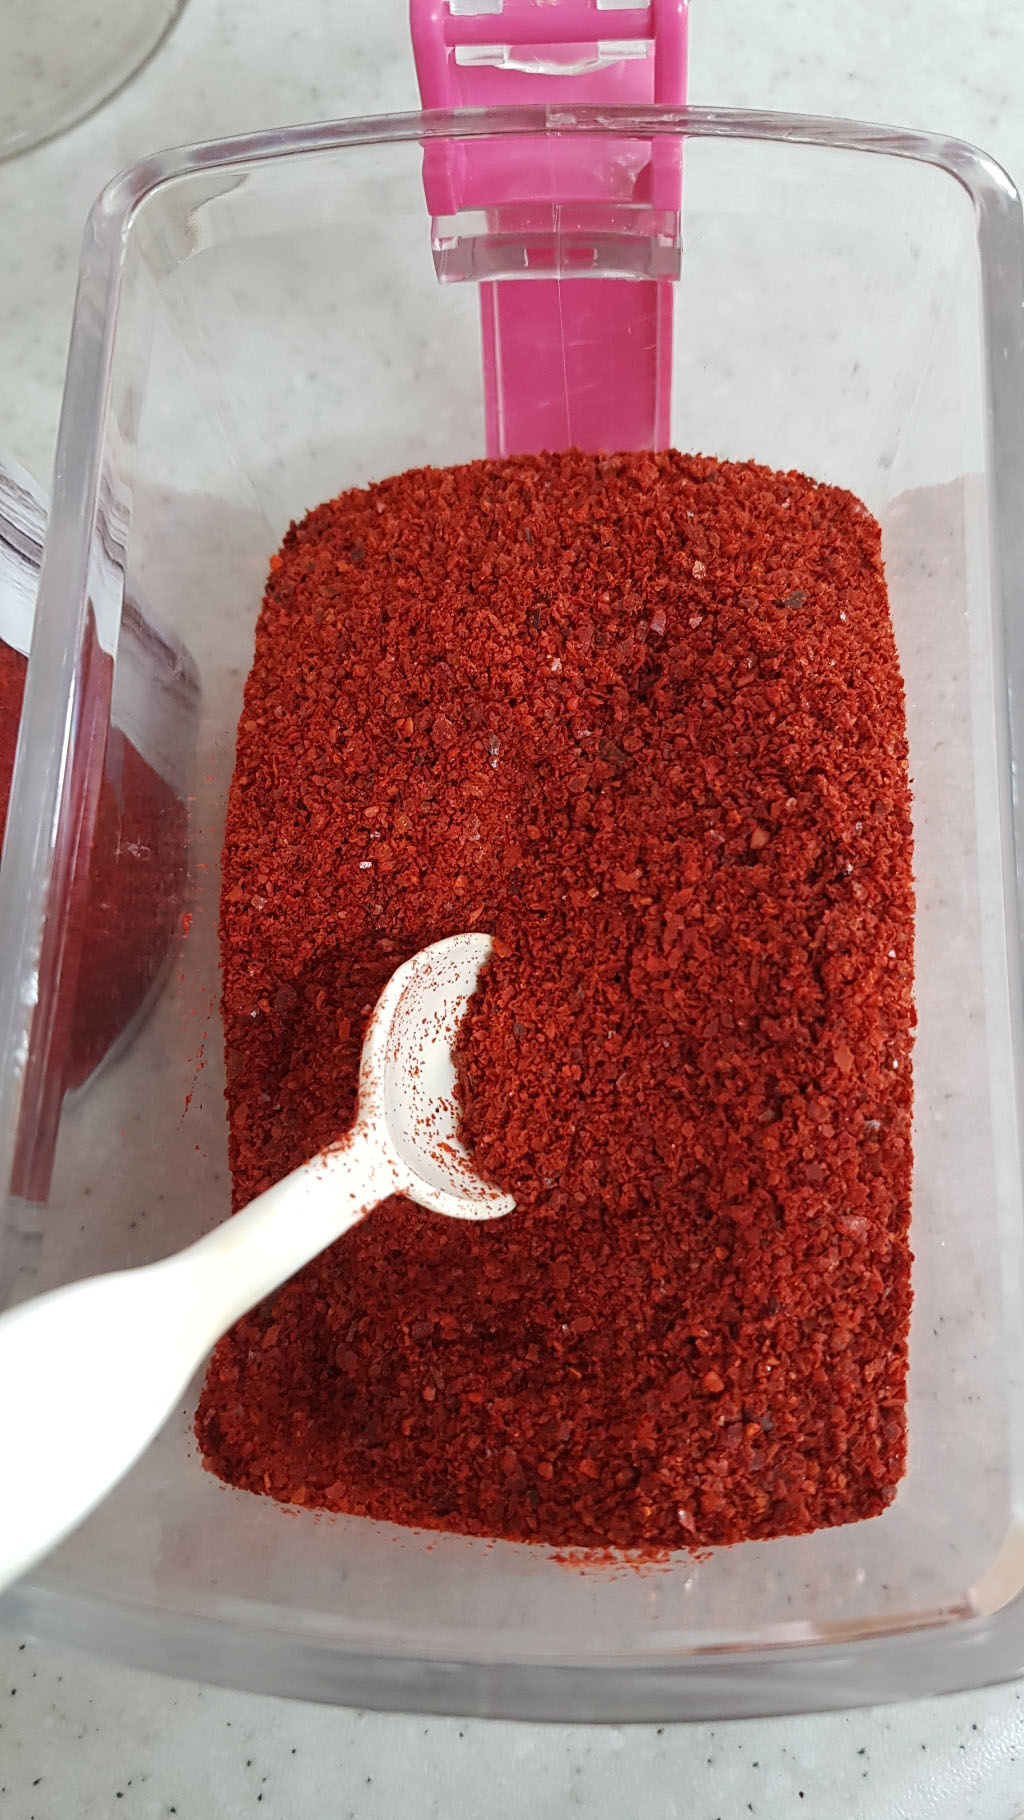 CHILGAP Korean Sun-dried Red Pepper Powder Gochugaru Chili Flake